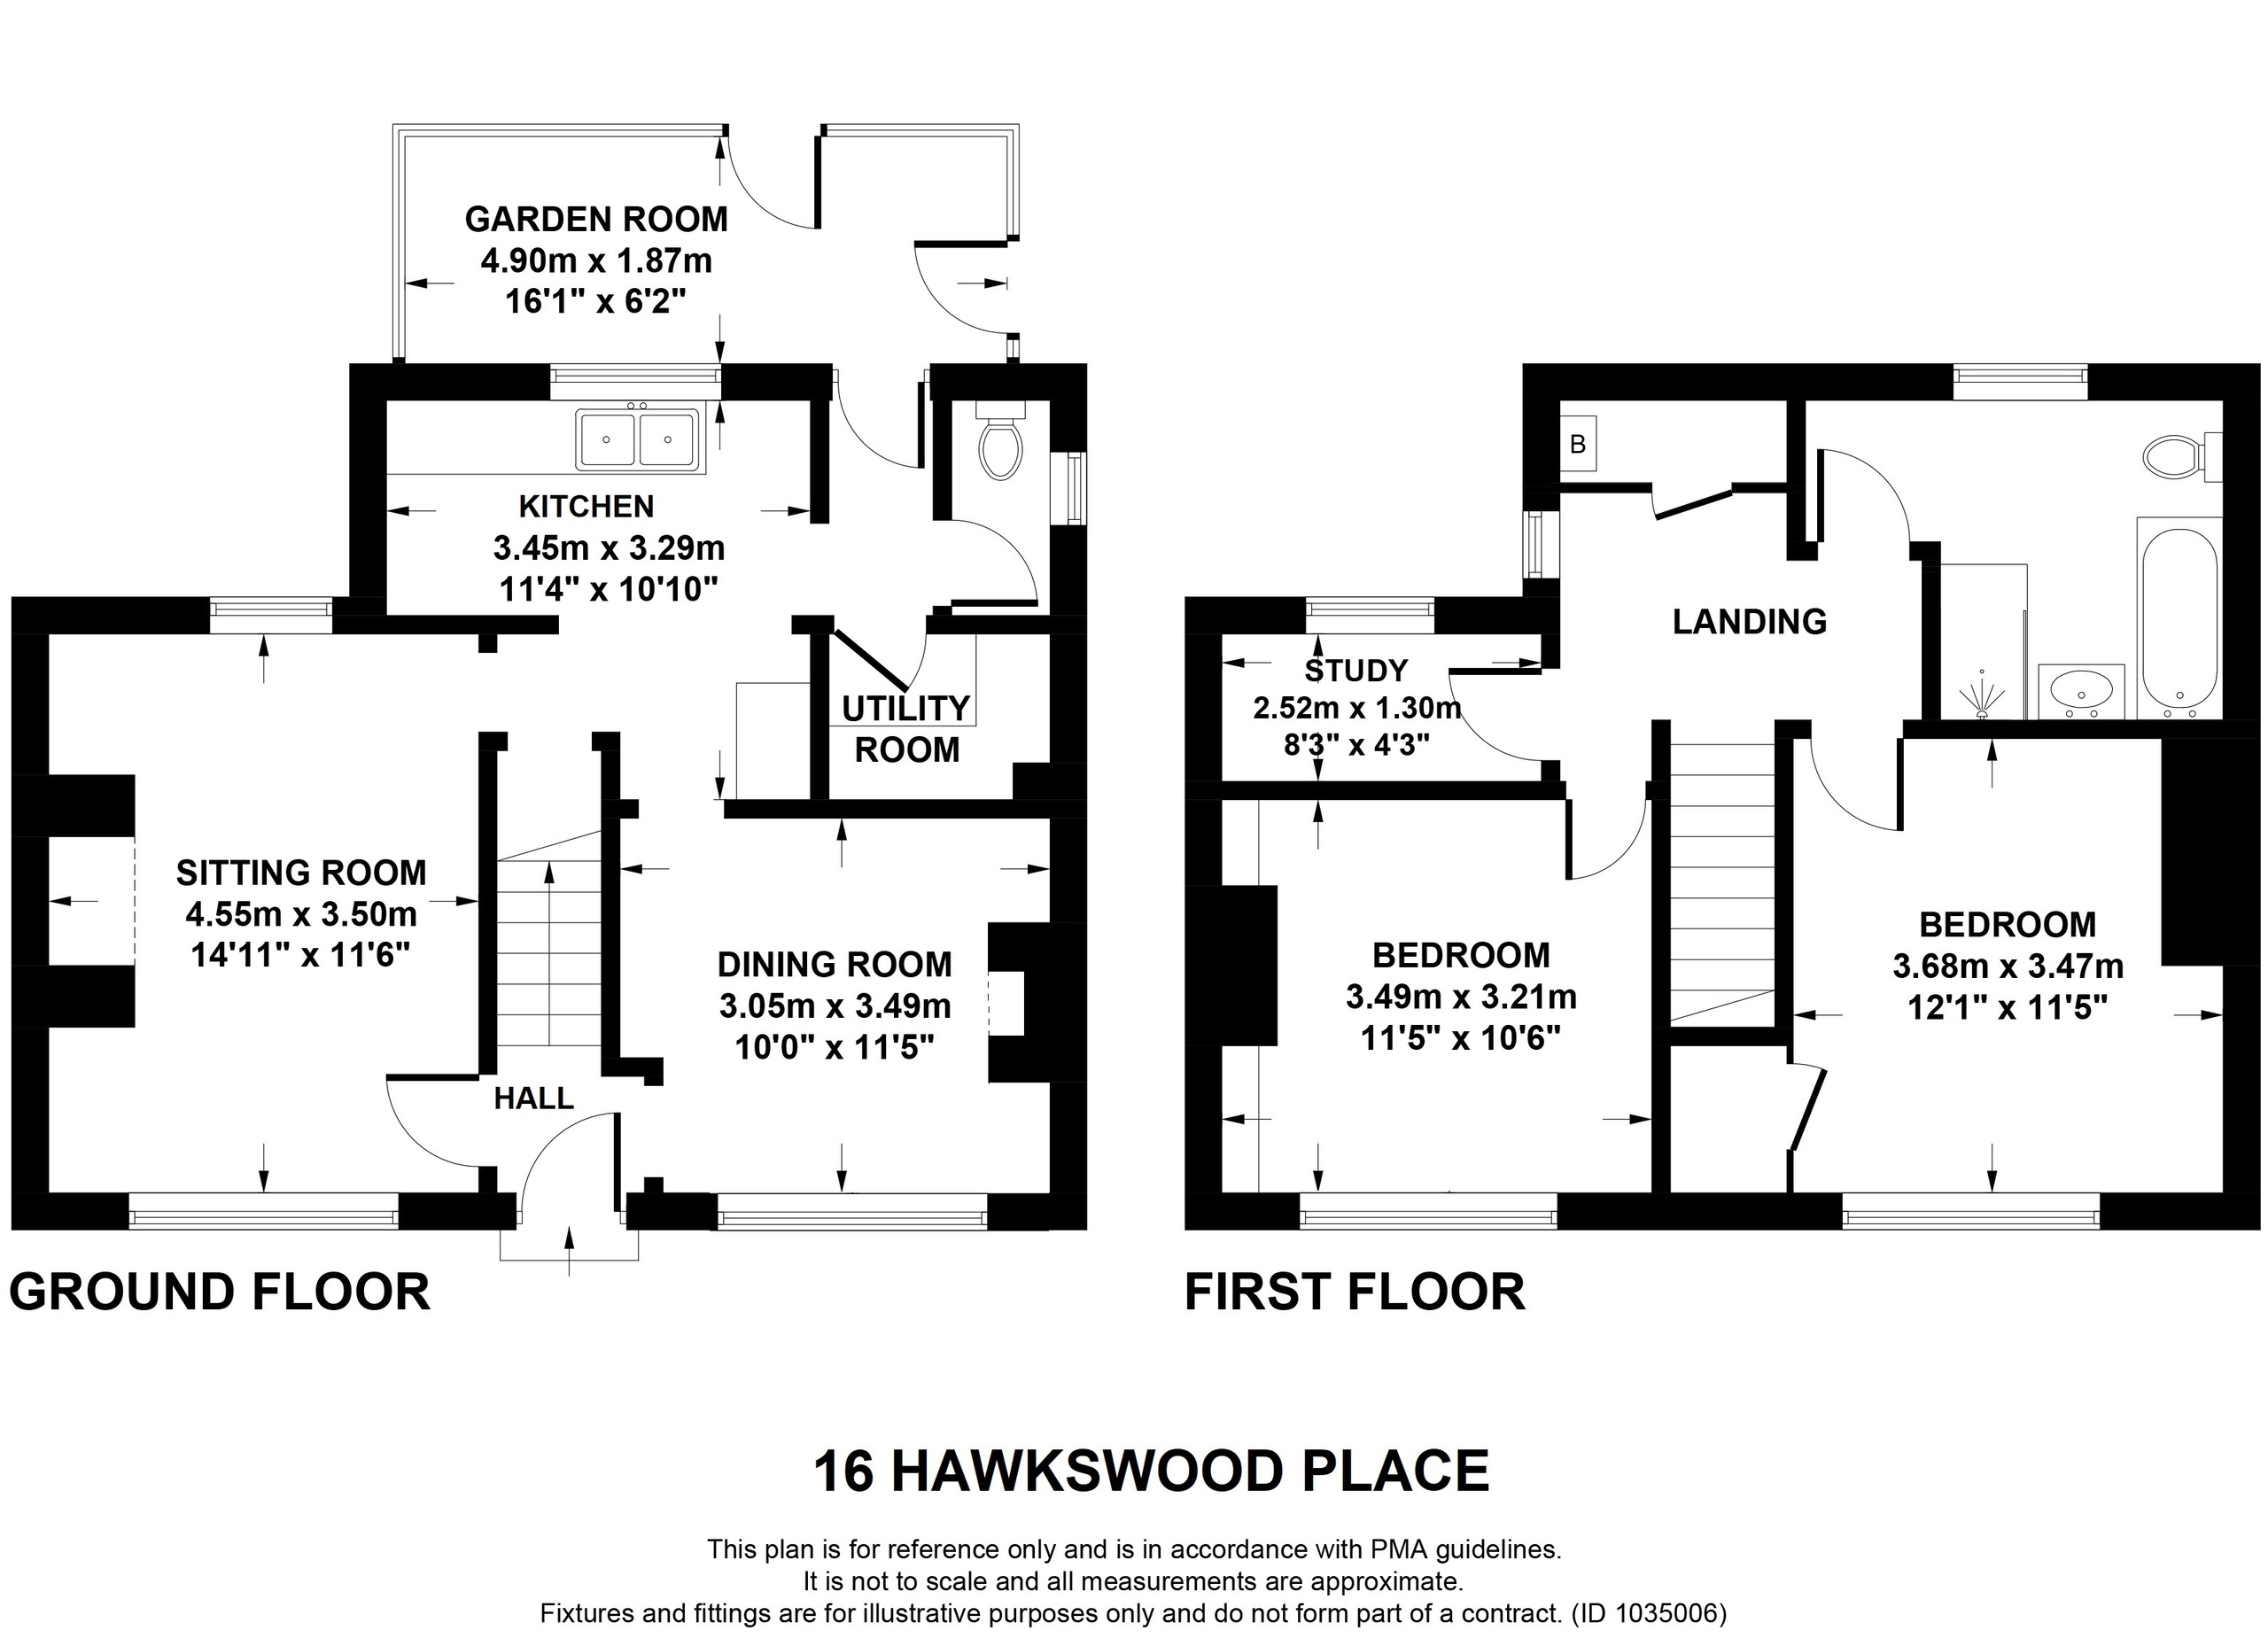 2 bed semi-detached house for sale in Hawksworth, Leeds - Property floorplan